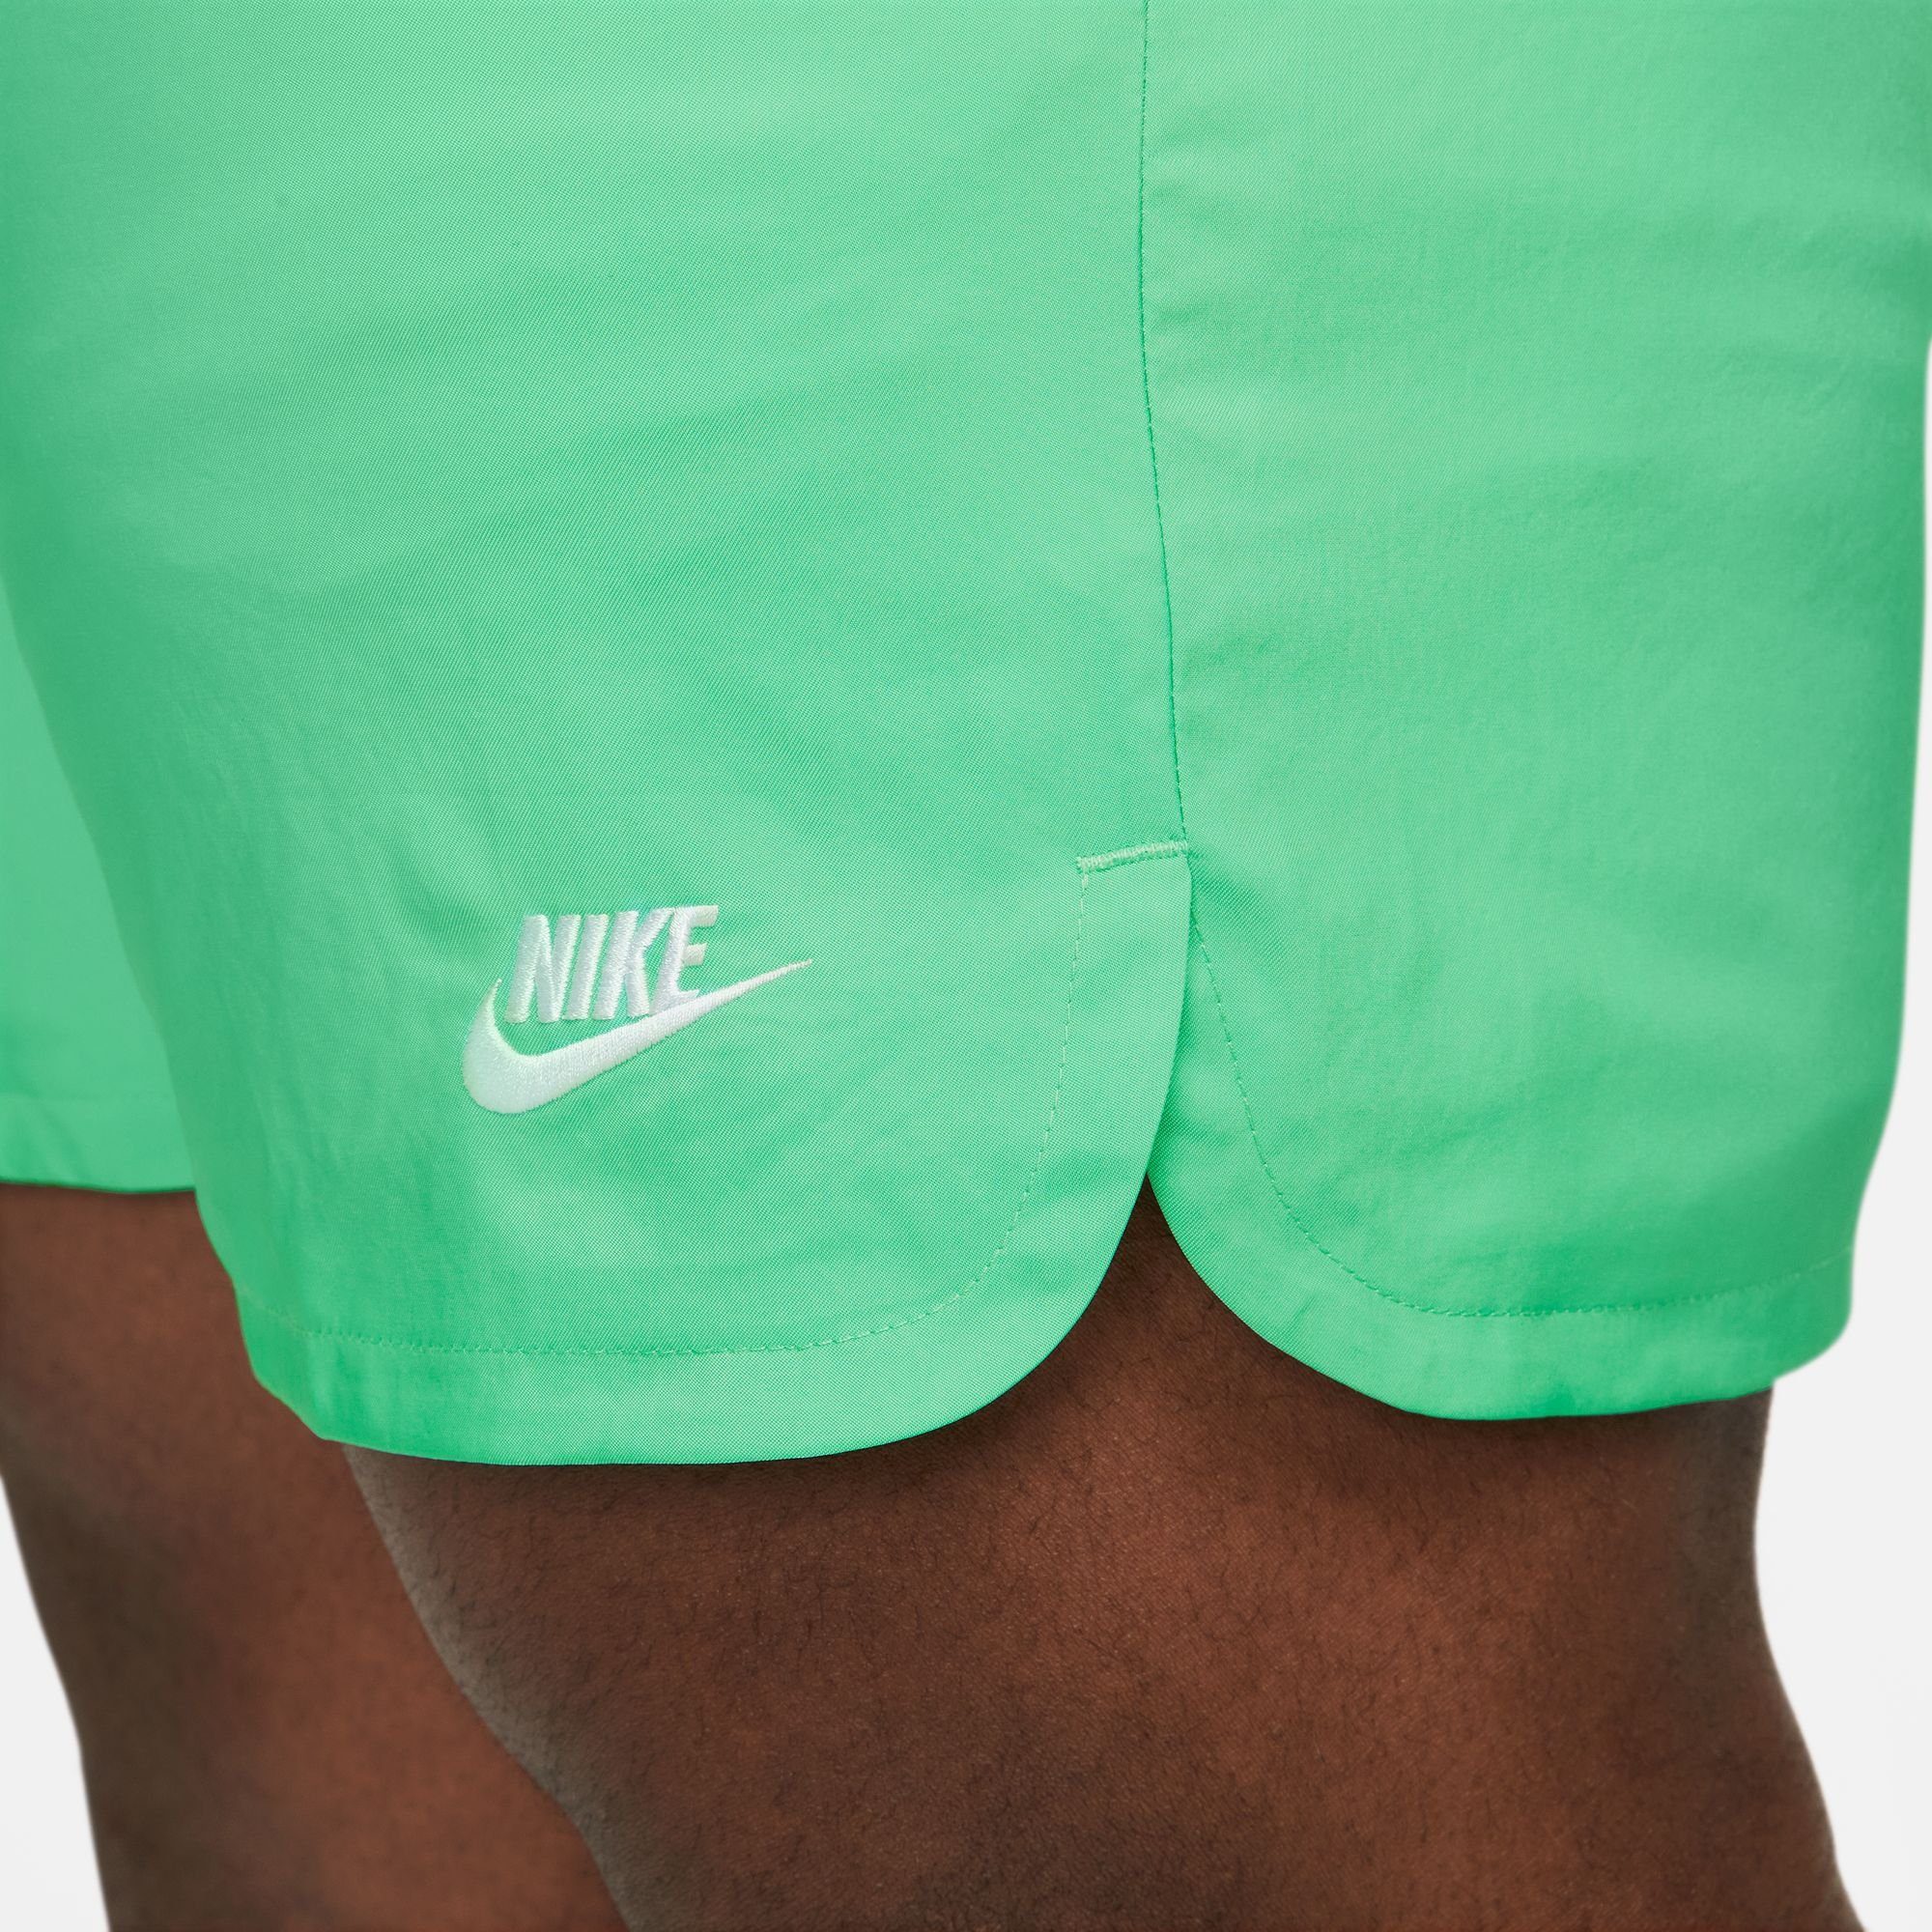 grün Men's Essentials Lined Sportswear Nike Shorts Flow Shorts Sport Woven